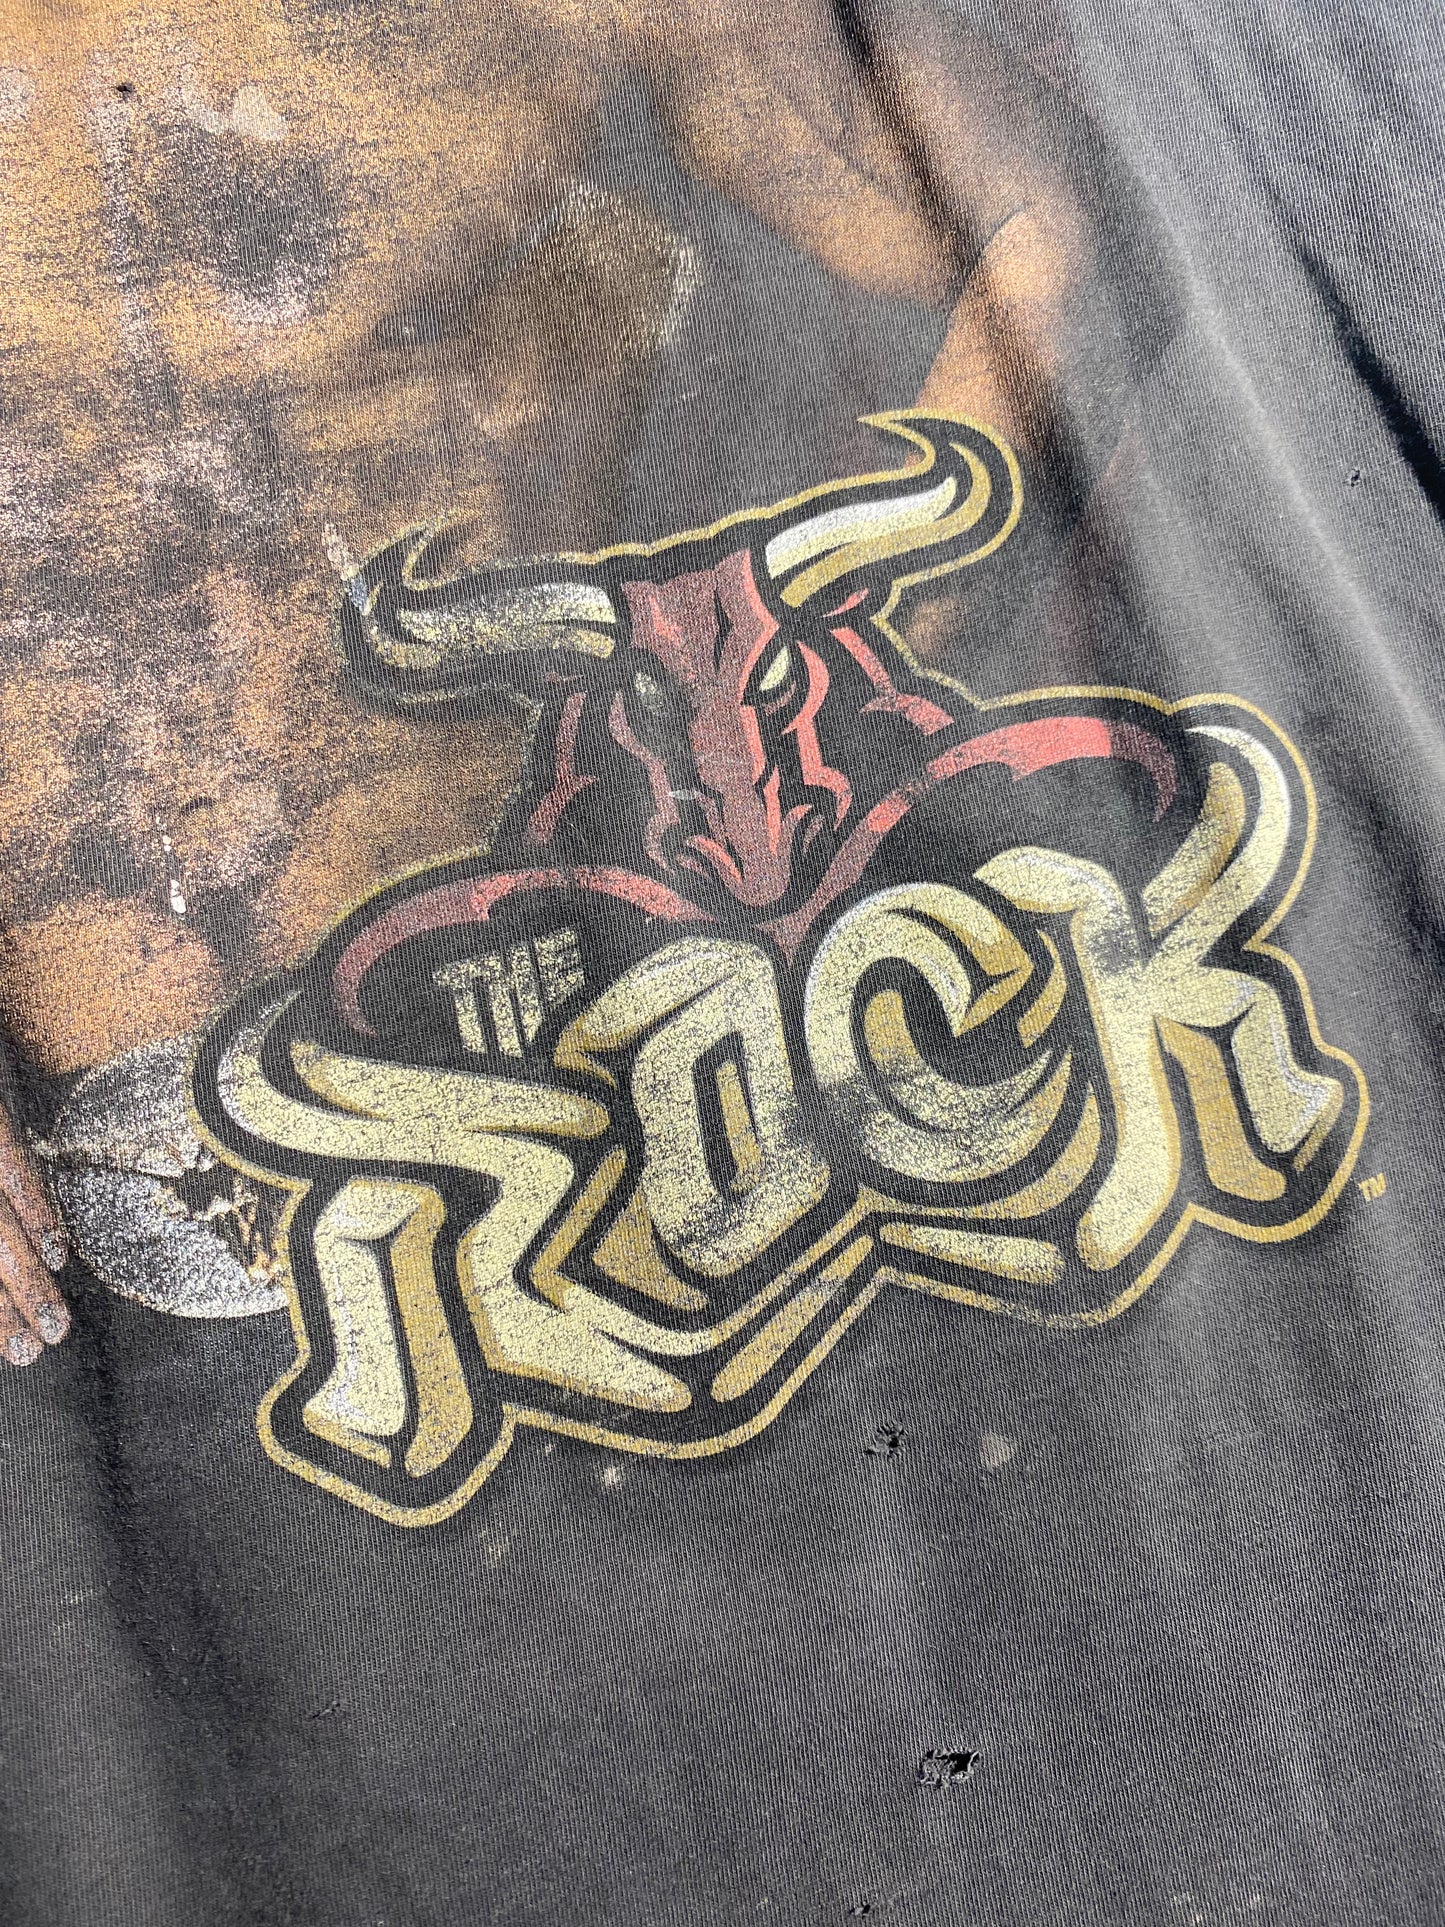 Vintage The Rock T-Shirt Cut OFF